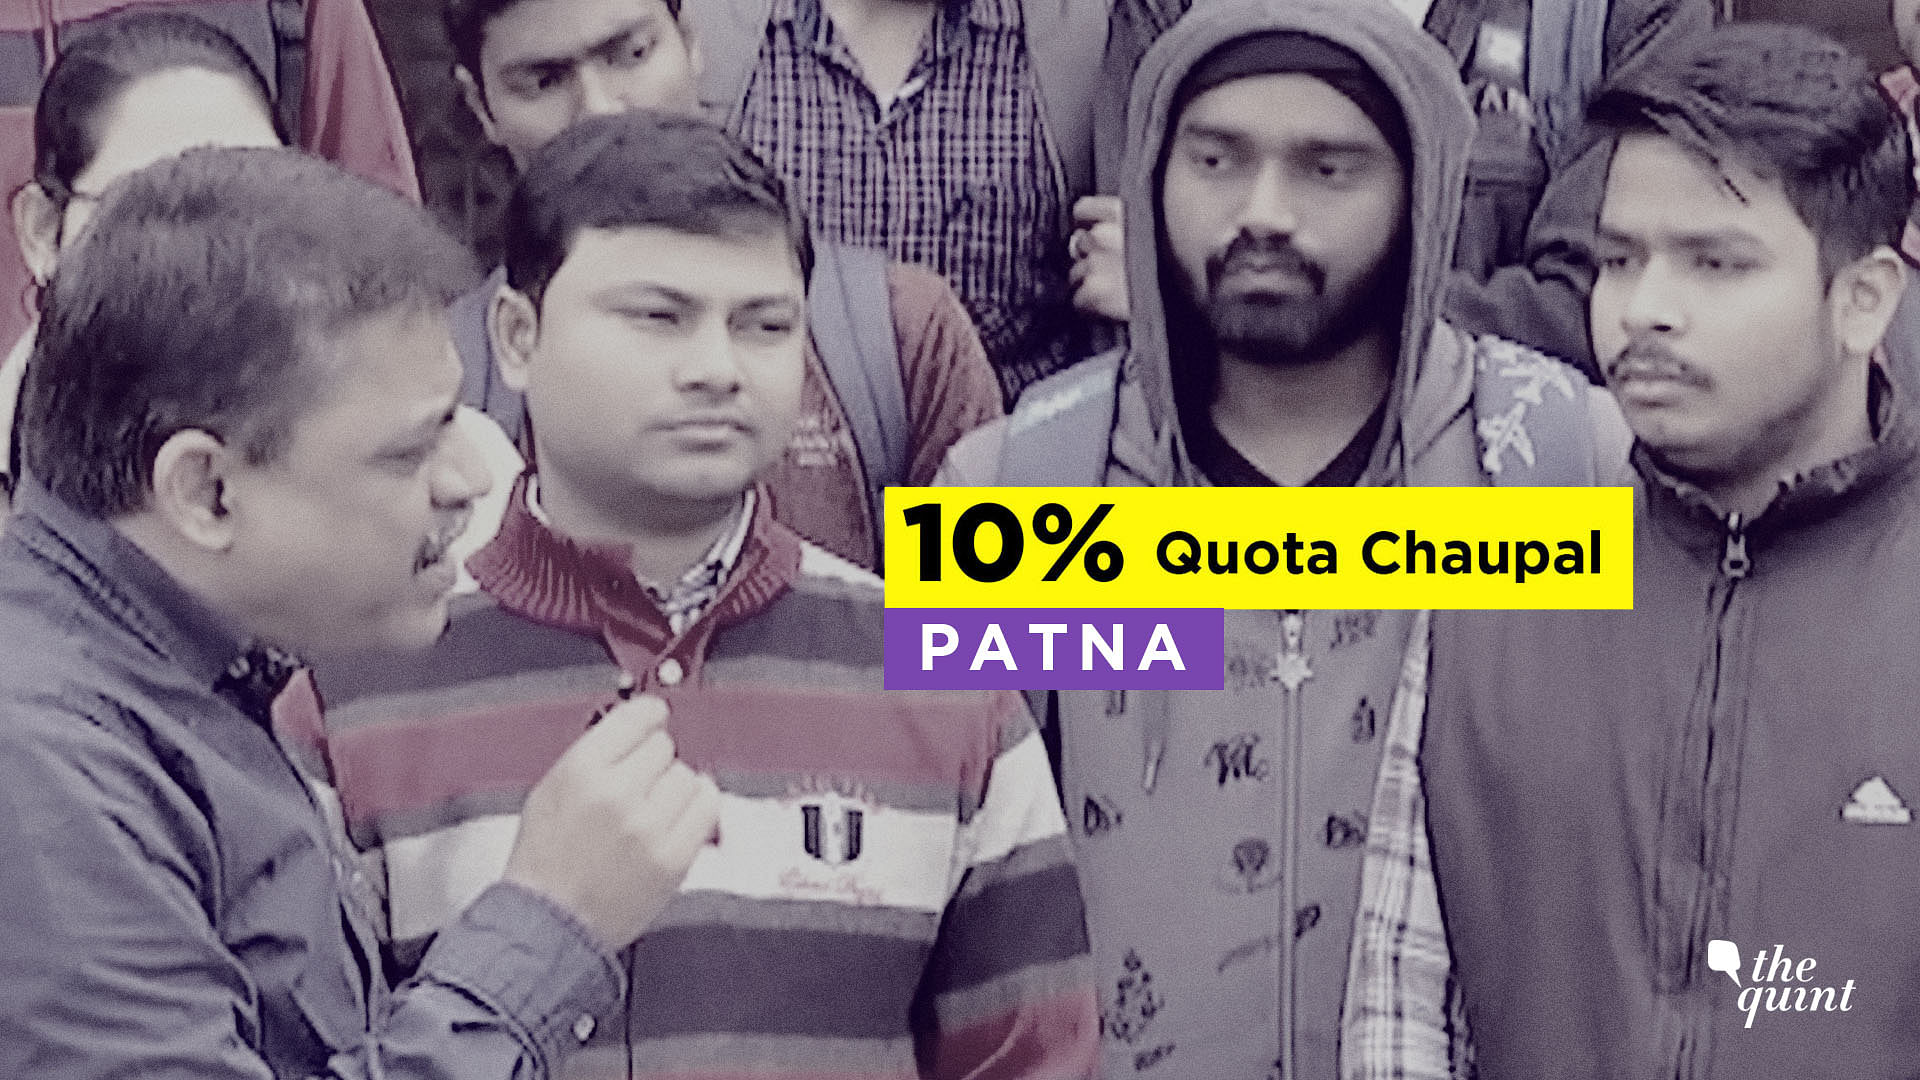 The Quint’s Chaupal reaches Patna.